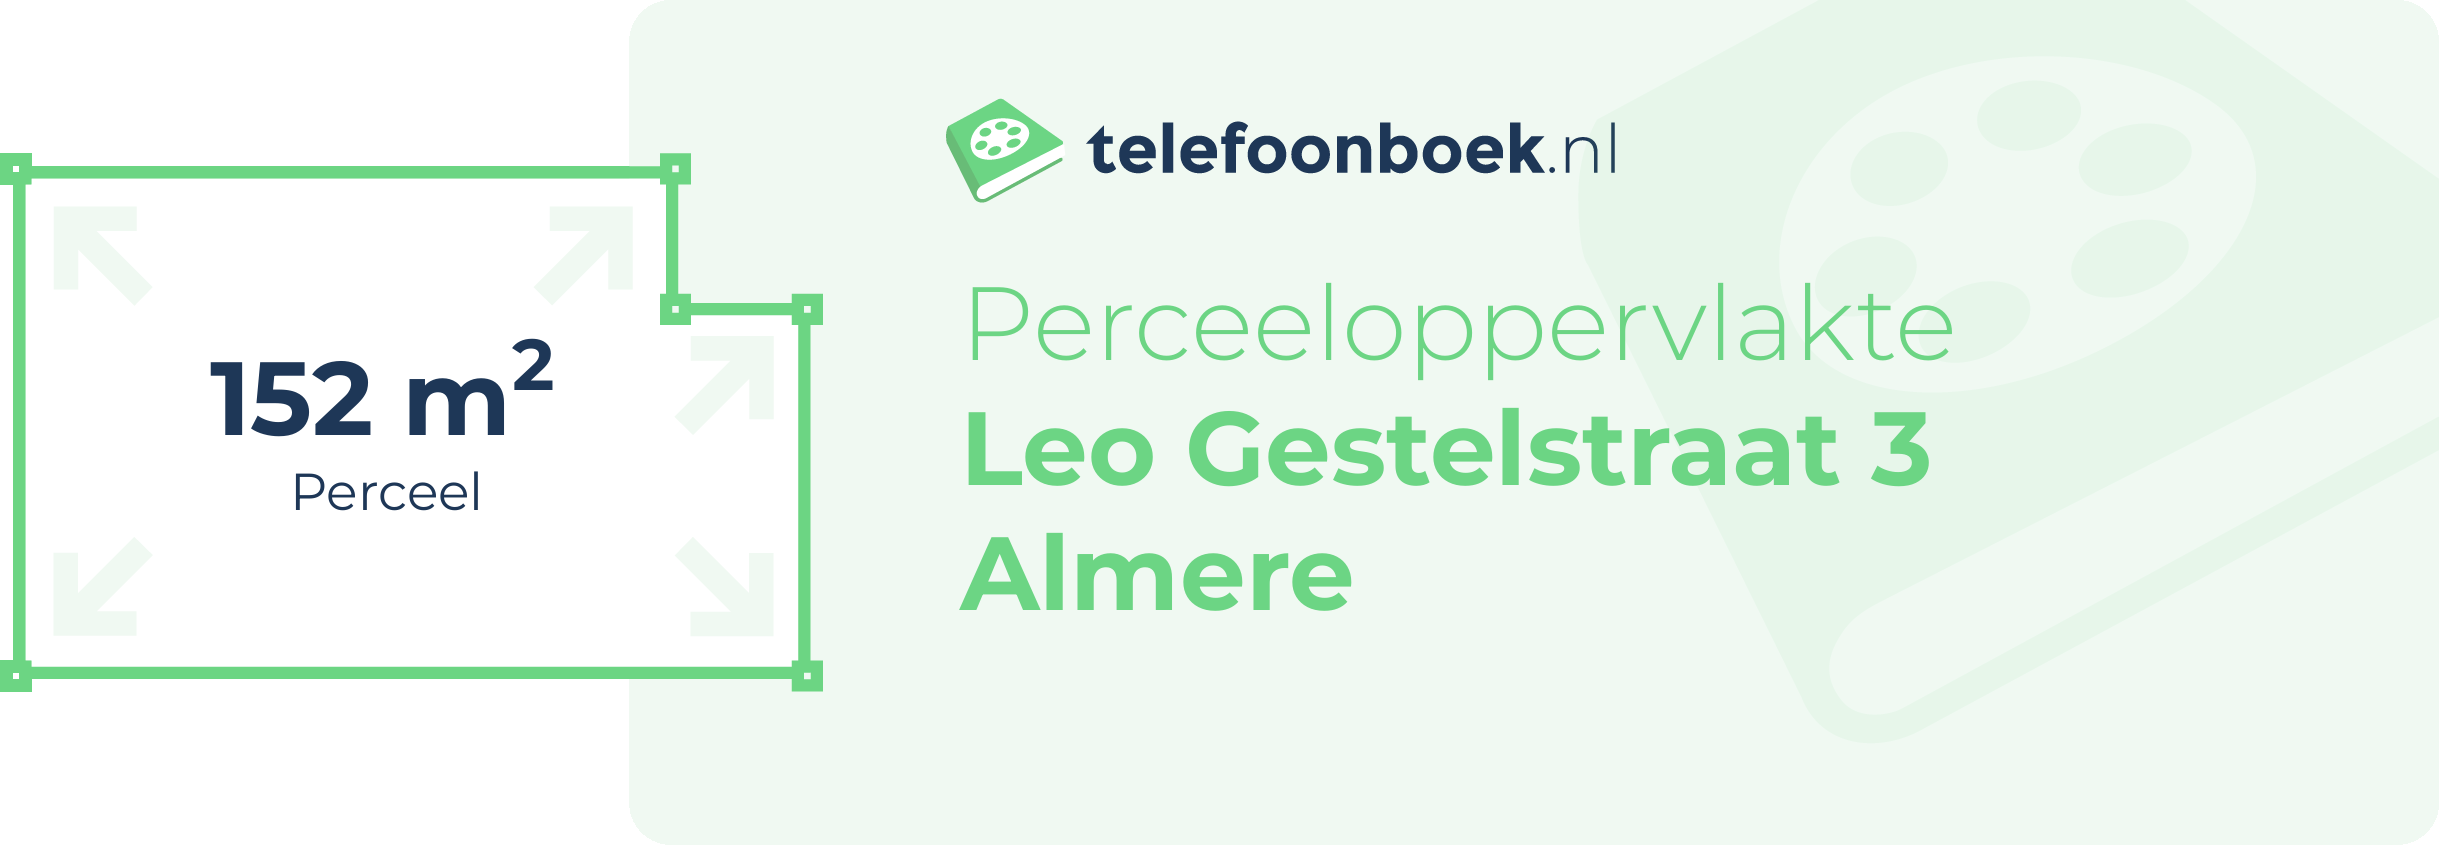 Perceeloppervlakte Leo Gestelstraat 3 Almere